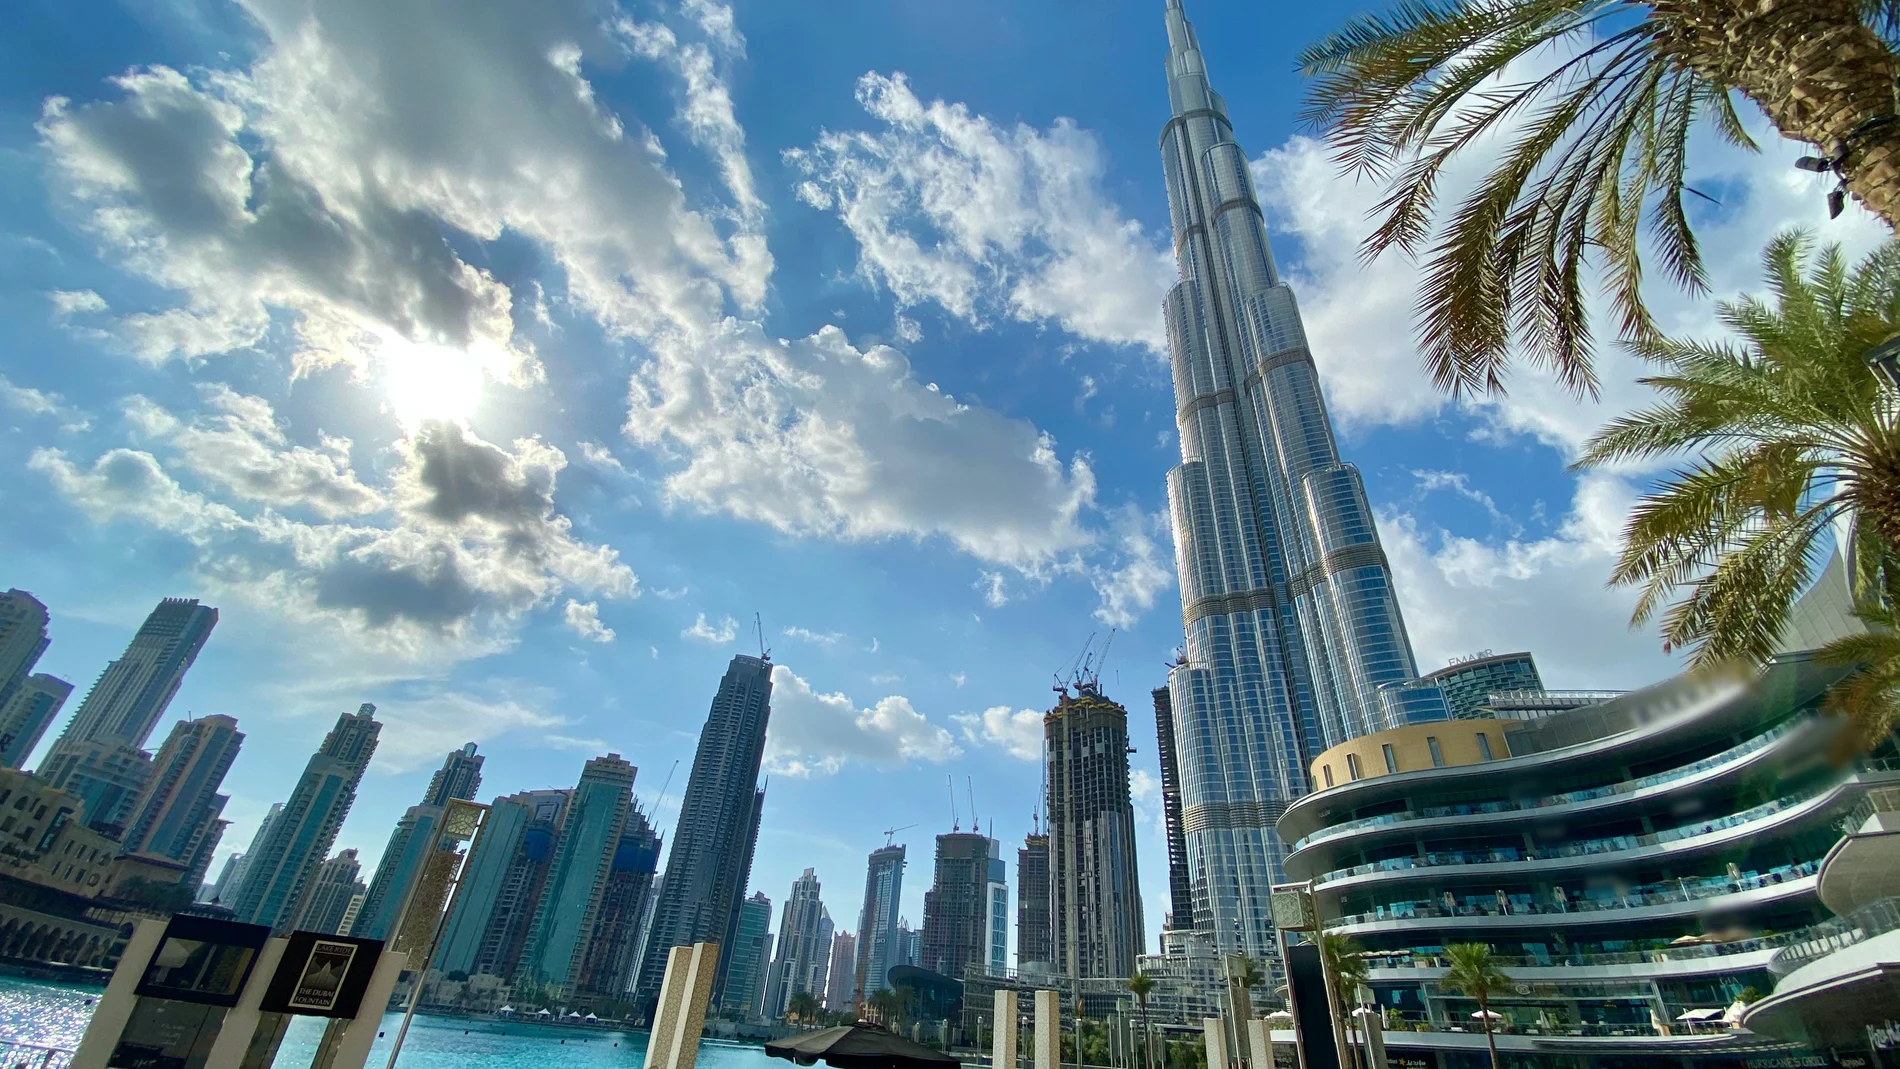 Vista de un complejo de rascacielos en Dubái, Emiratos Árabes.